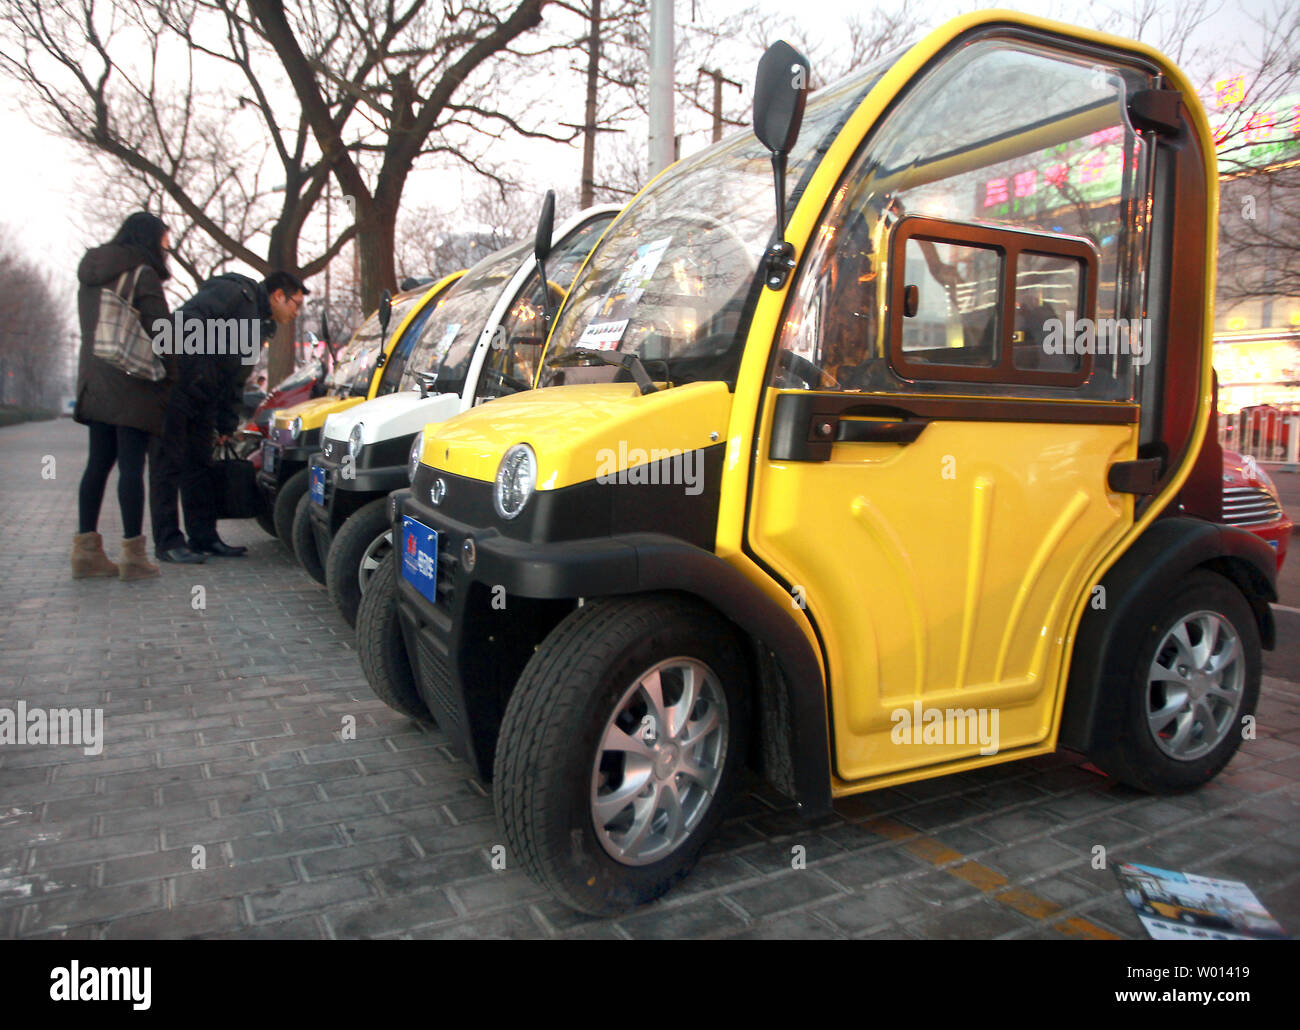 Small electric cars -Fotos und -Bildmaterial in hoher Auflösung